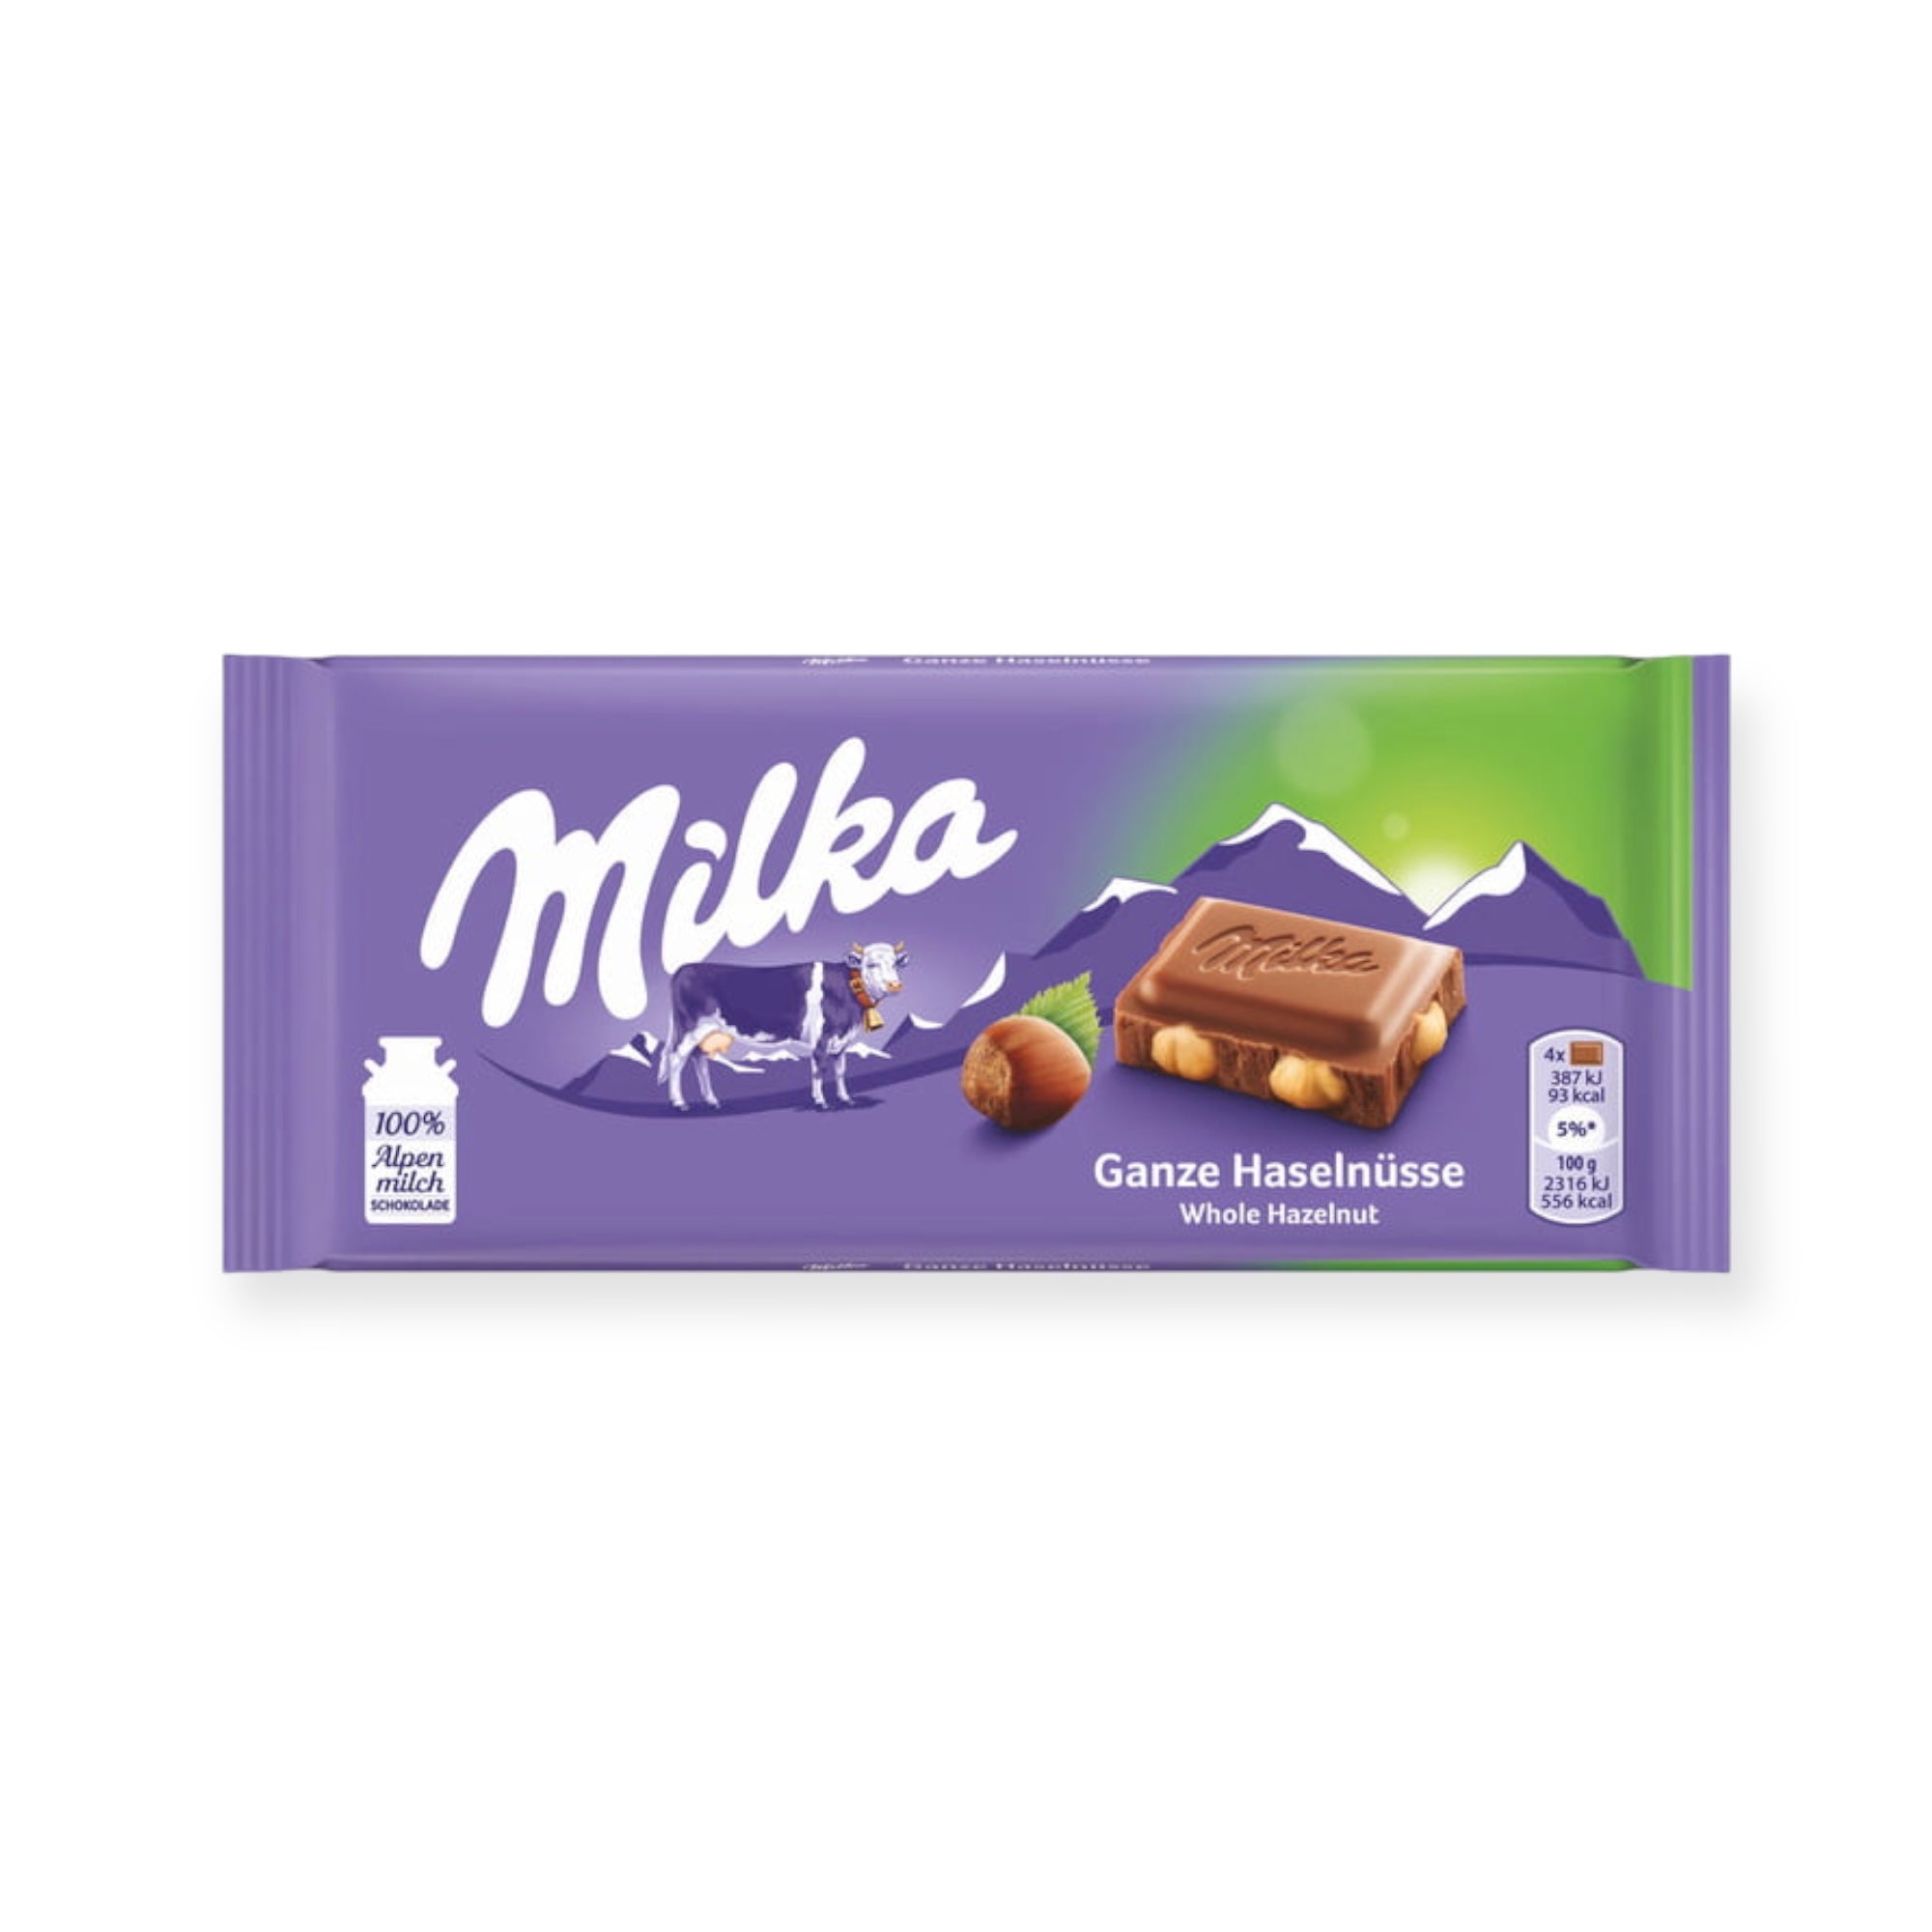 Kinder Maxi chocolate bars, 21 g / 0.74 oz (Box of 10 units)